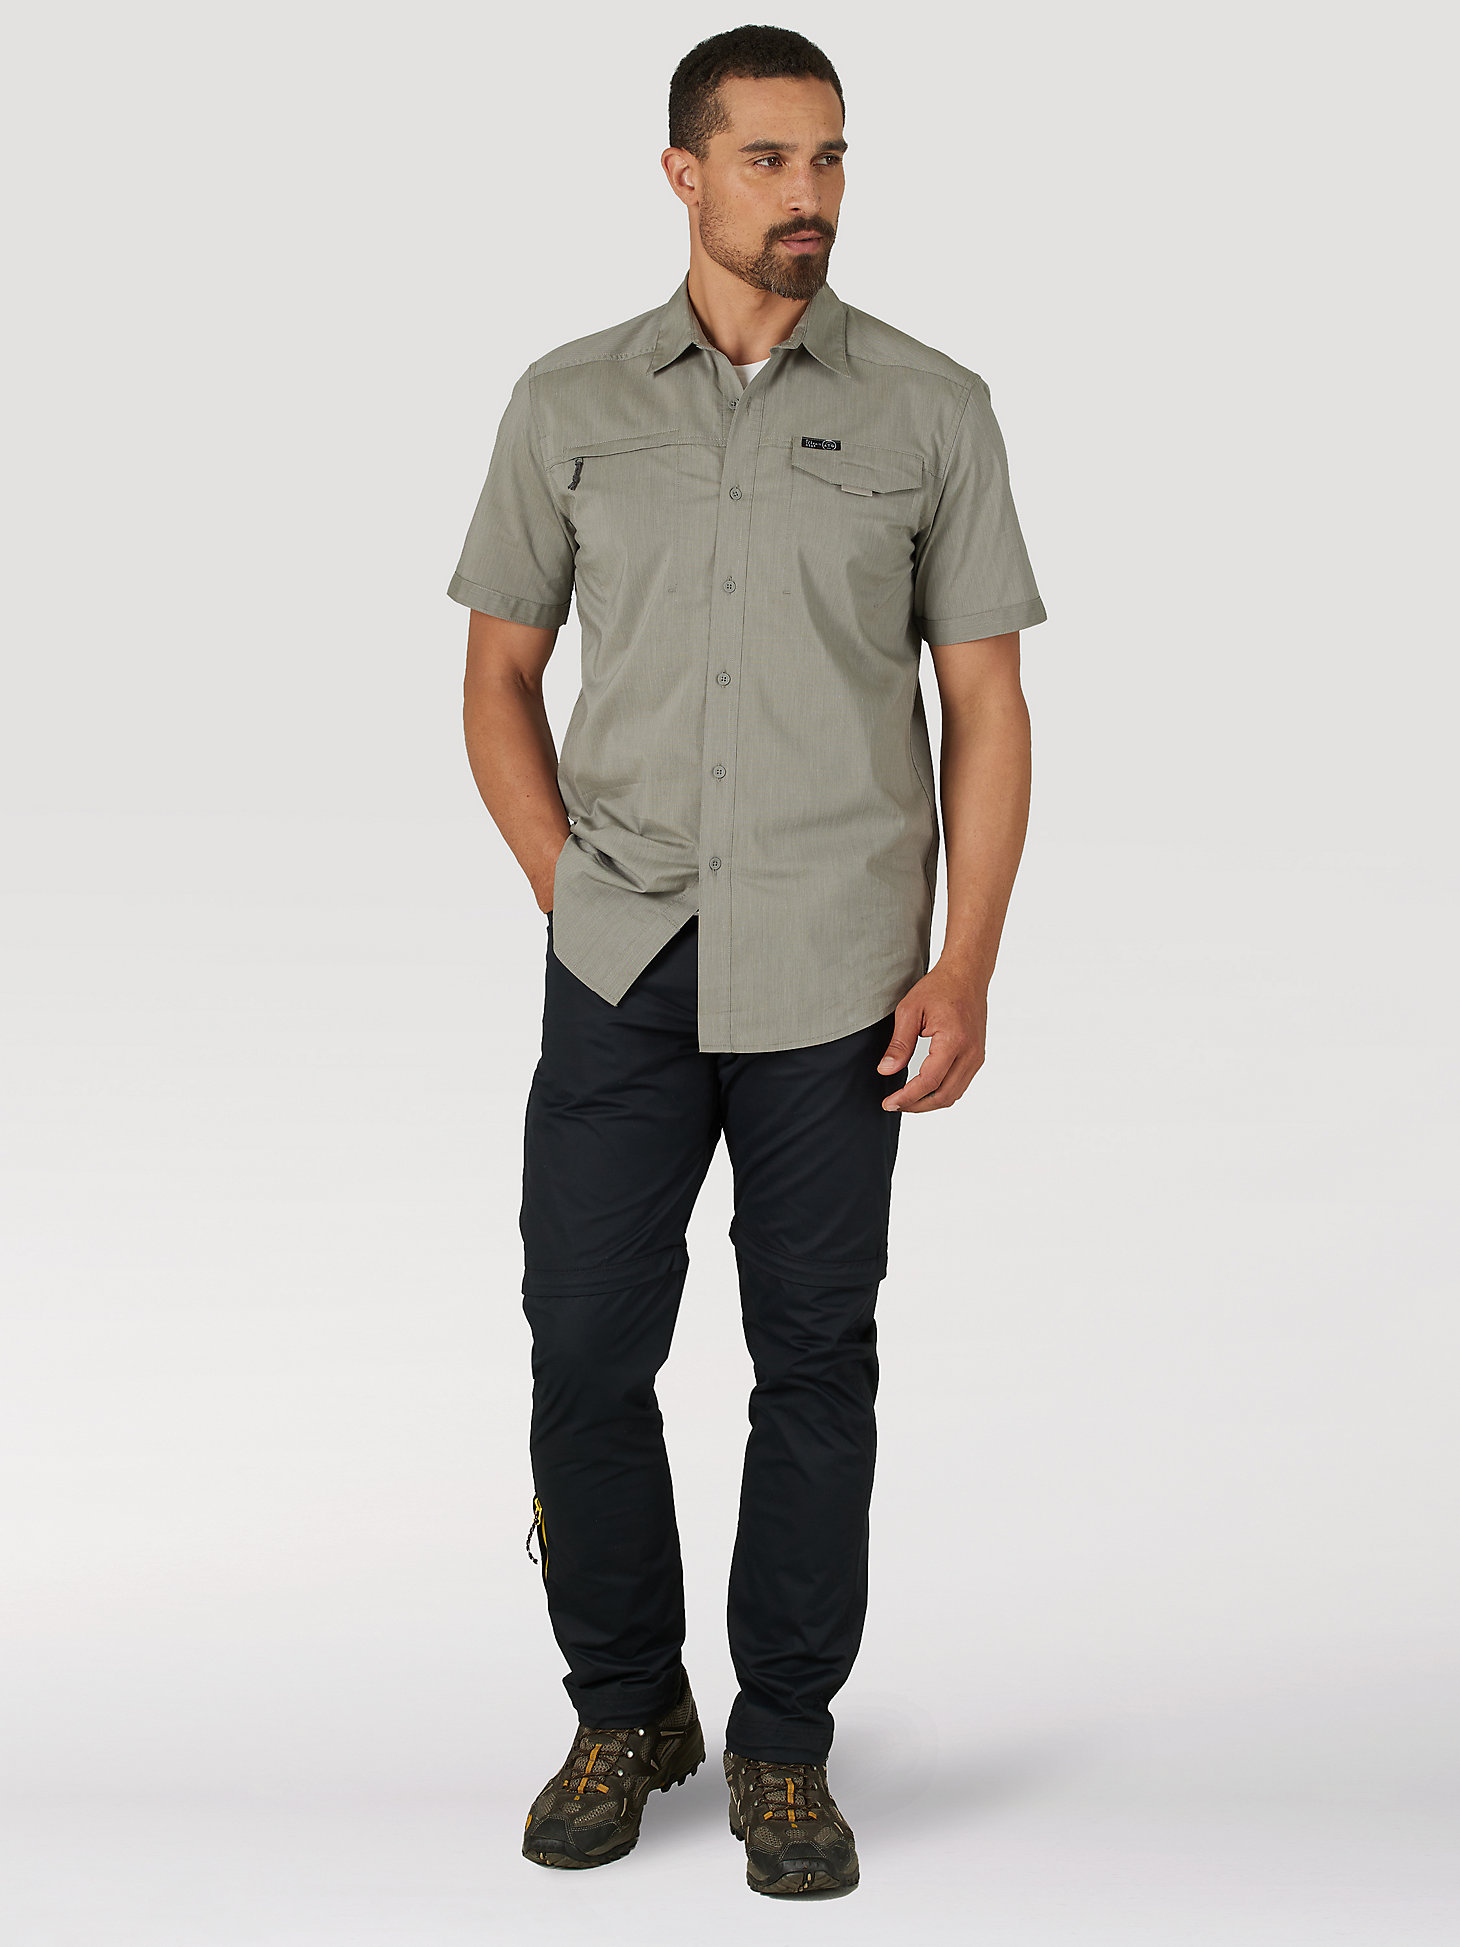 Short Sleeve Zip Pocket Shirt in Dusty Olive alternative view 1